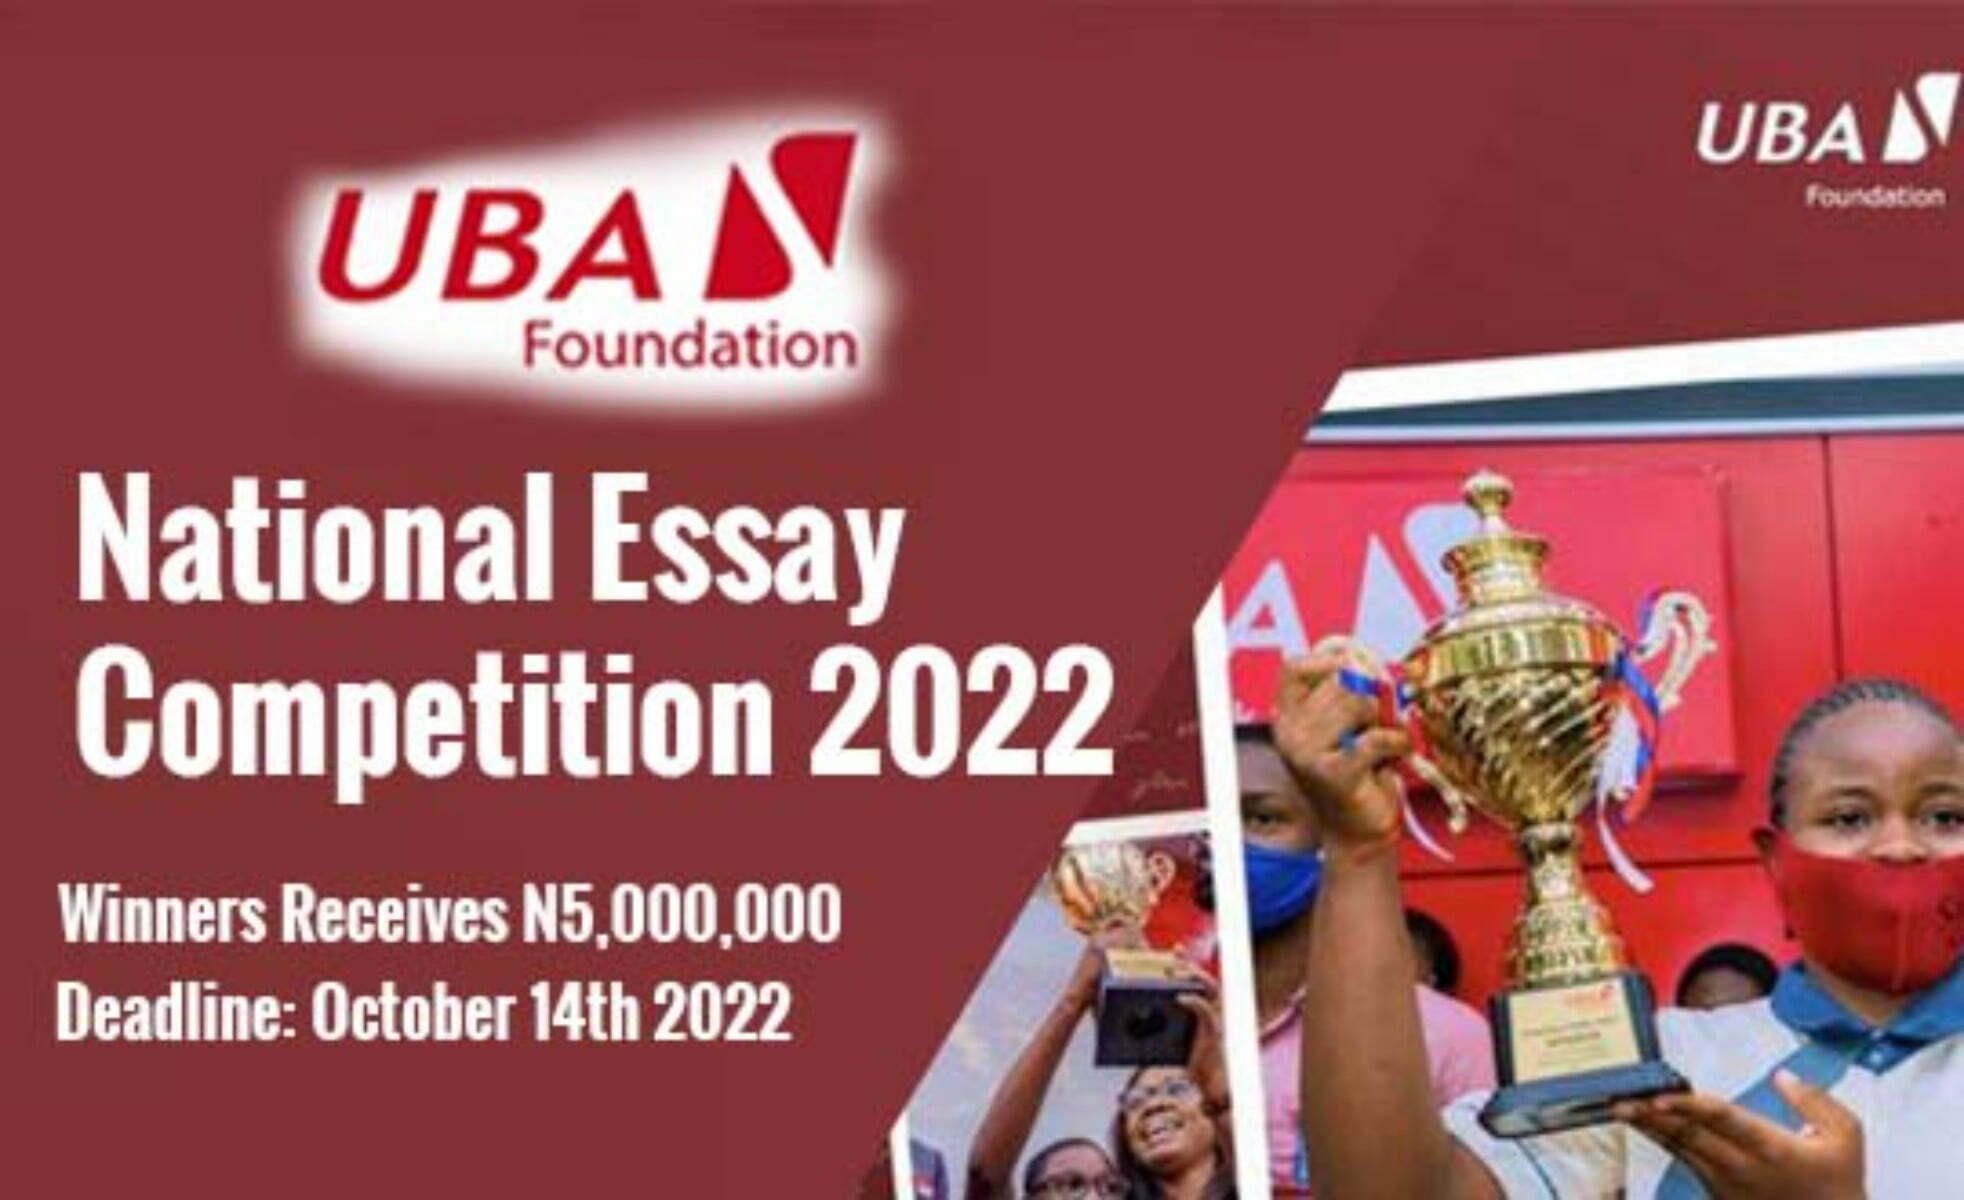 uba essay competition 2022